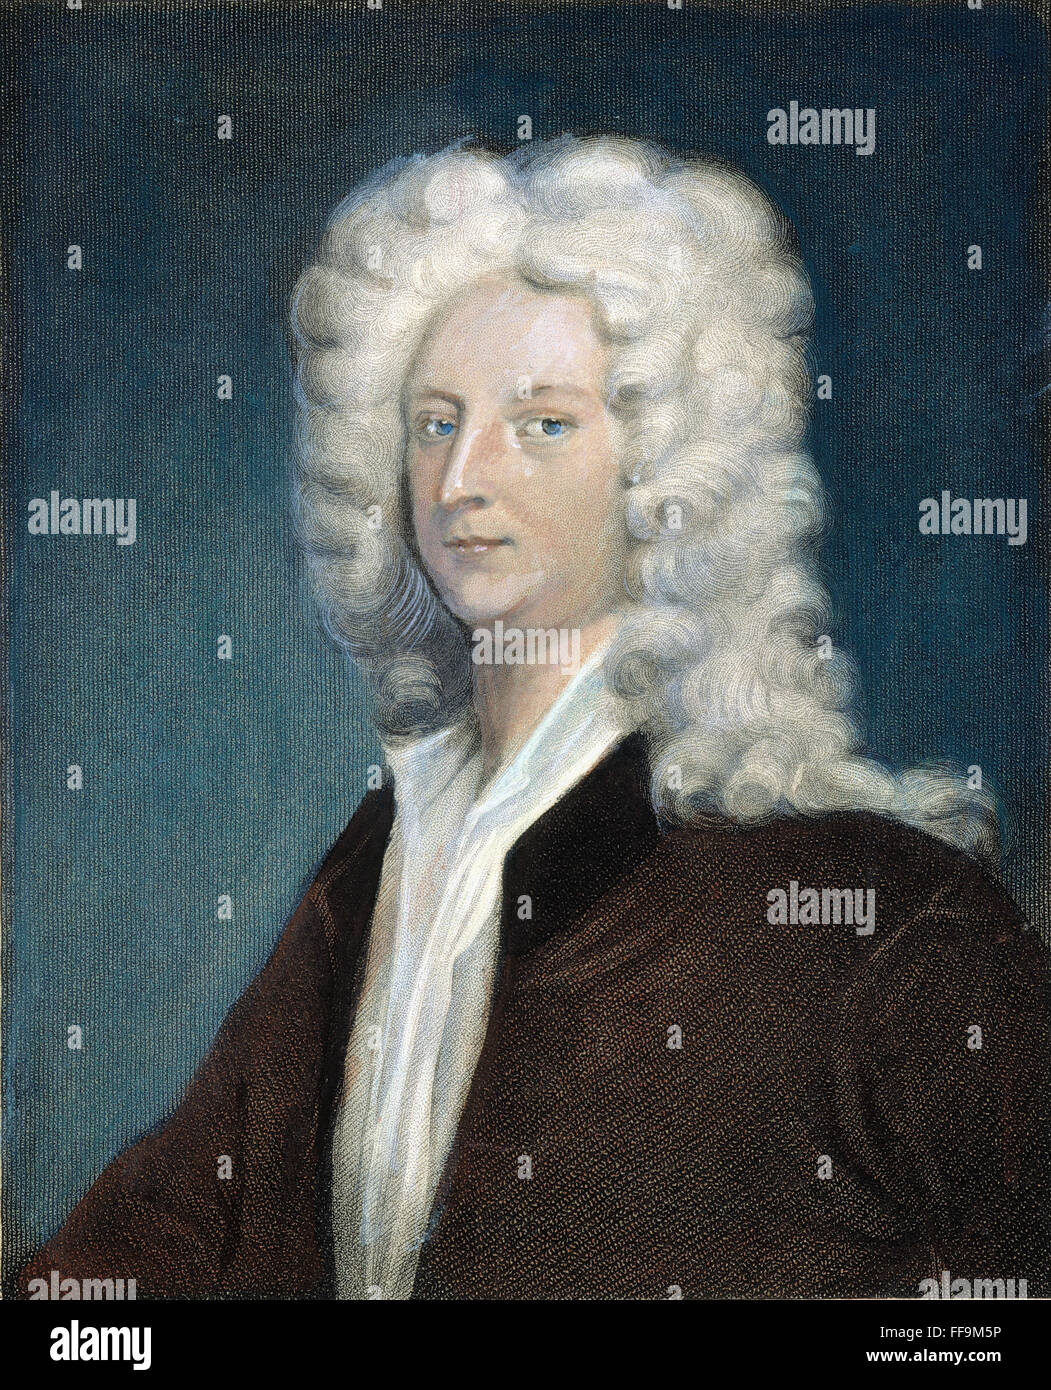 Giuseppe ADDSION (1672-1719). /NEnglish saggista, poeta e statista. Inglese incisione imbianchini, xix secolo. Foto Stock